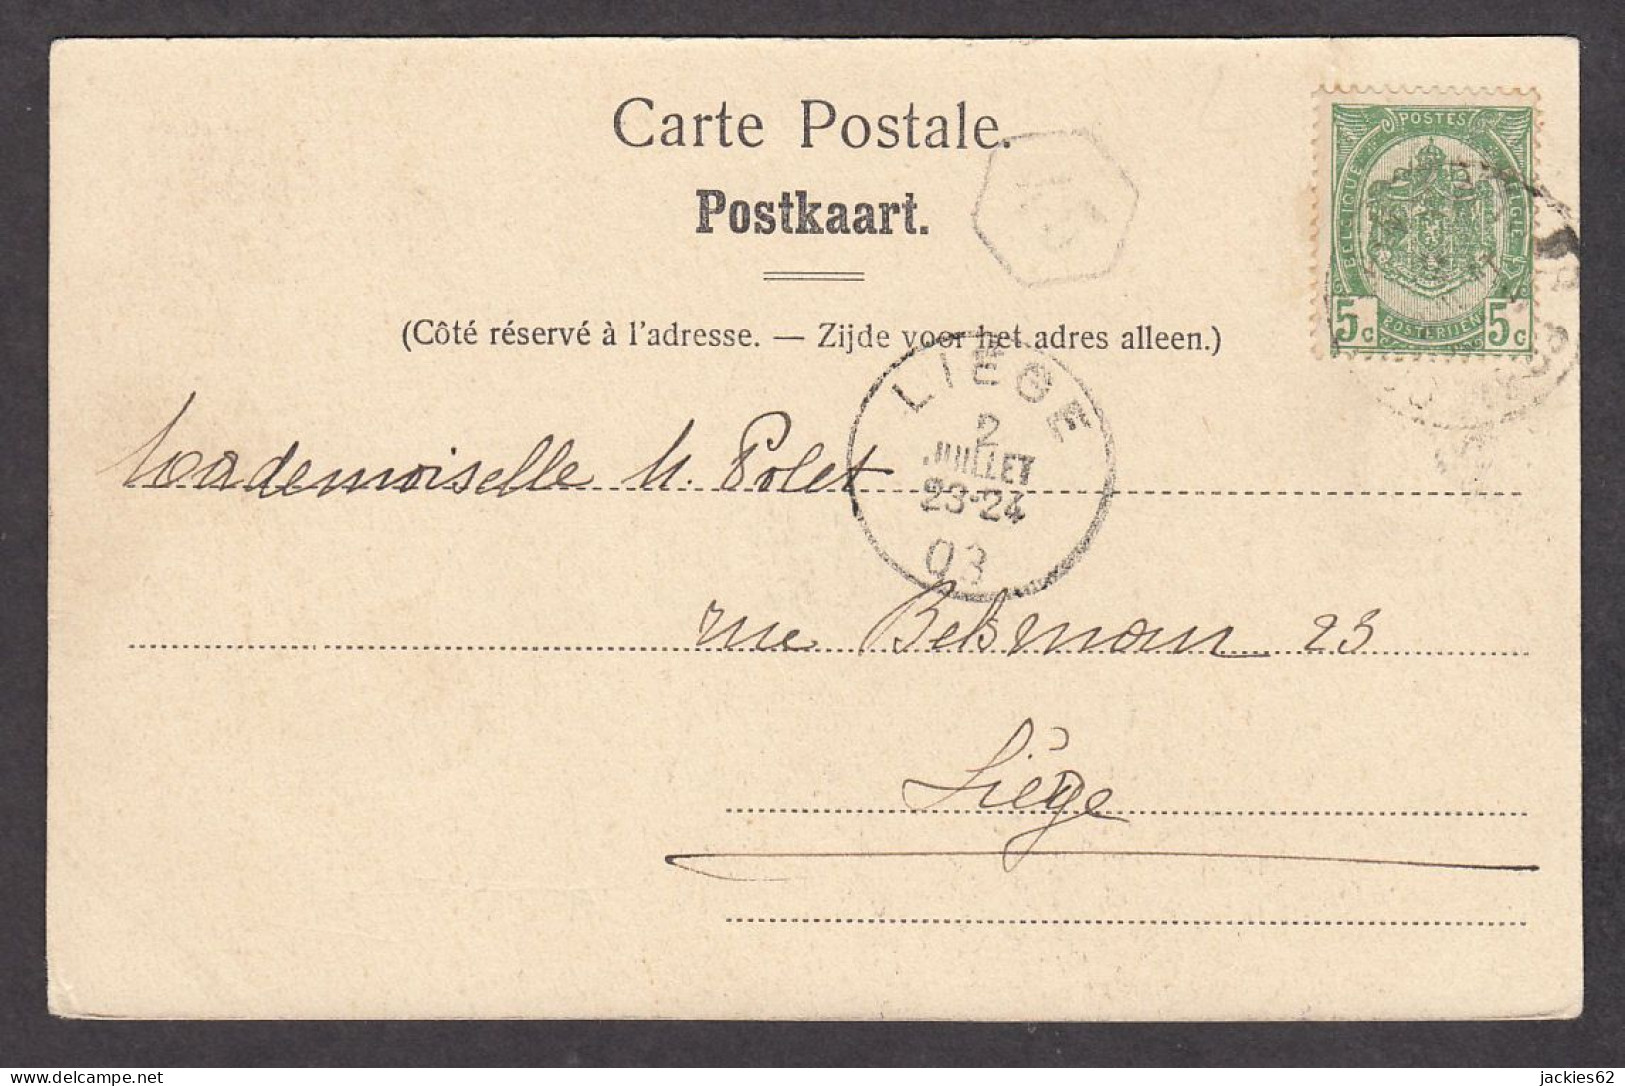 080596/ REMOUCHAMPS, Château De Montjardin, 1903 - Aywaille